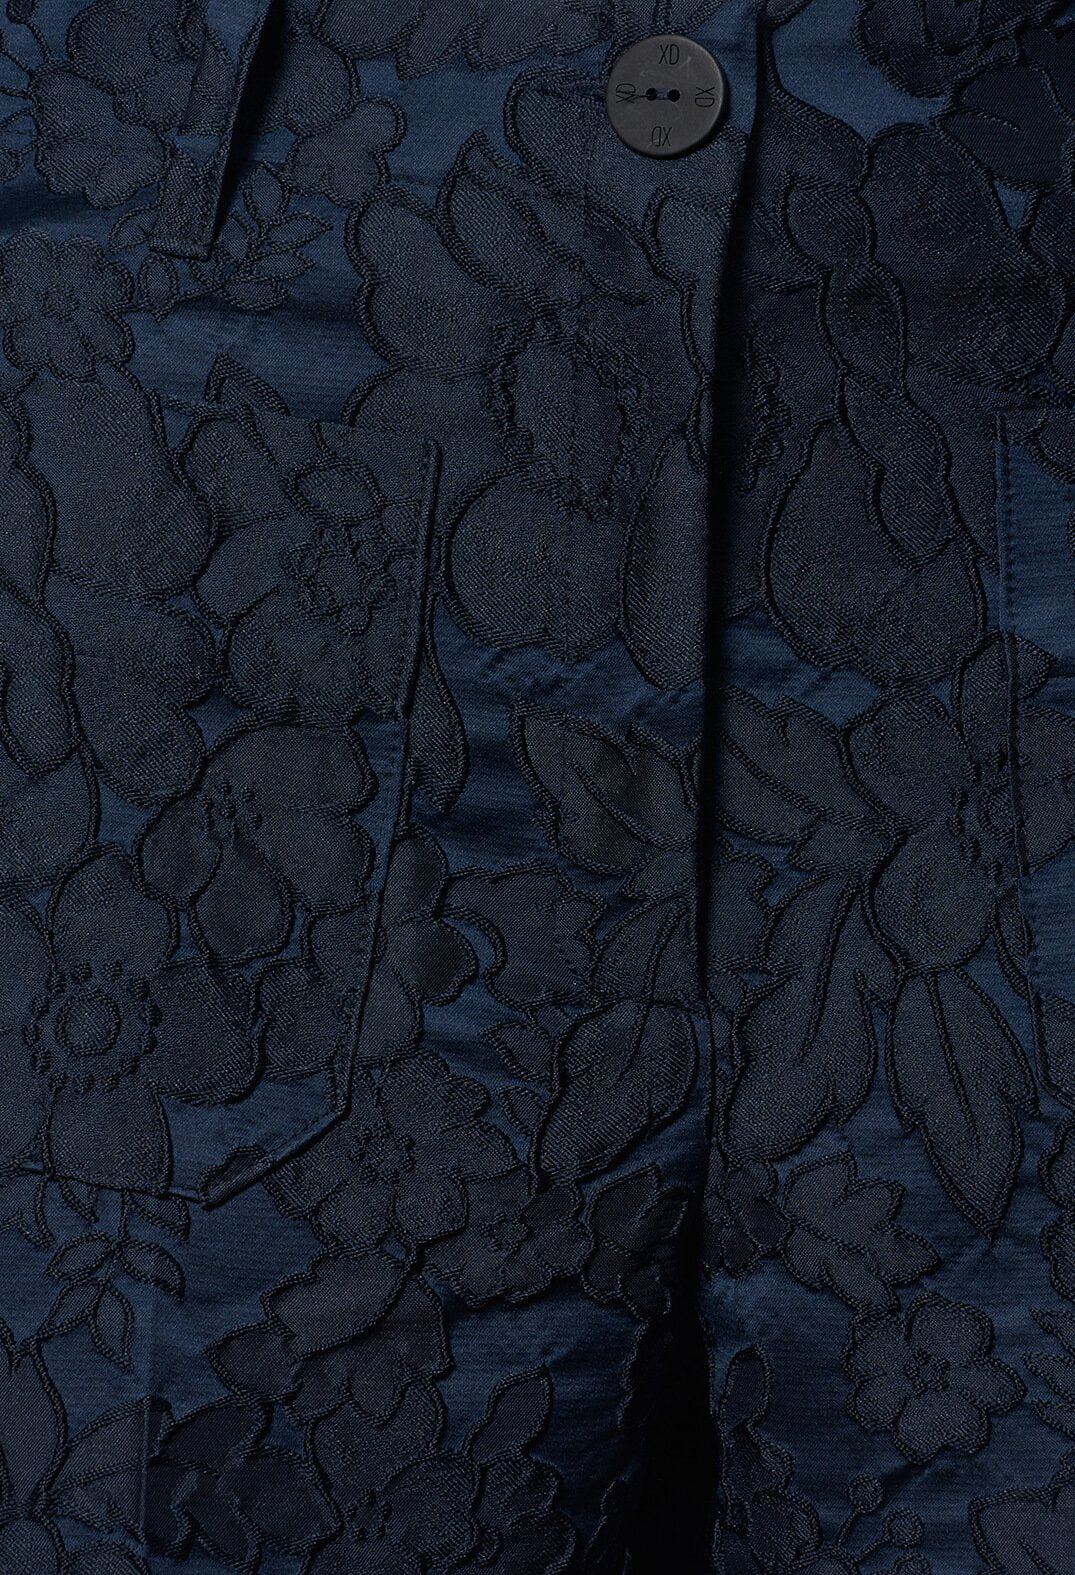 Textured Trousers in Dark Blue